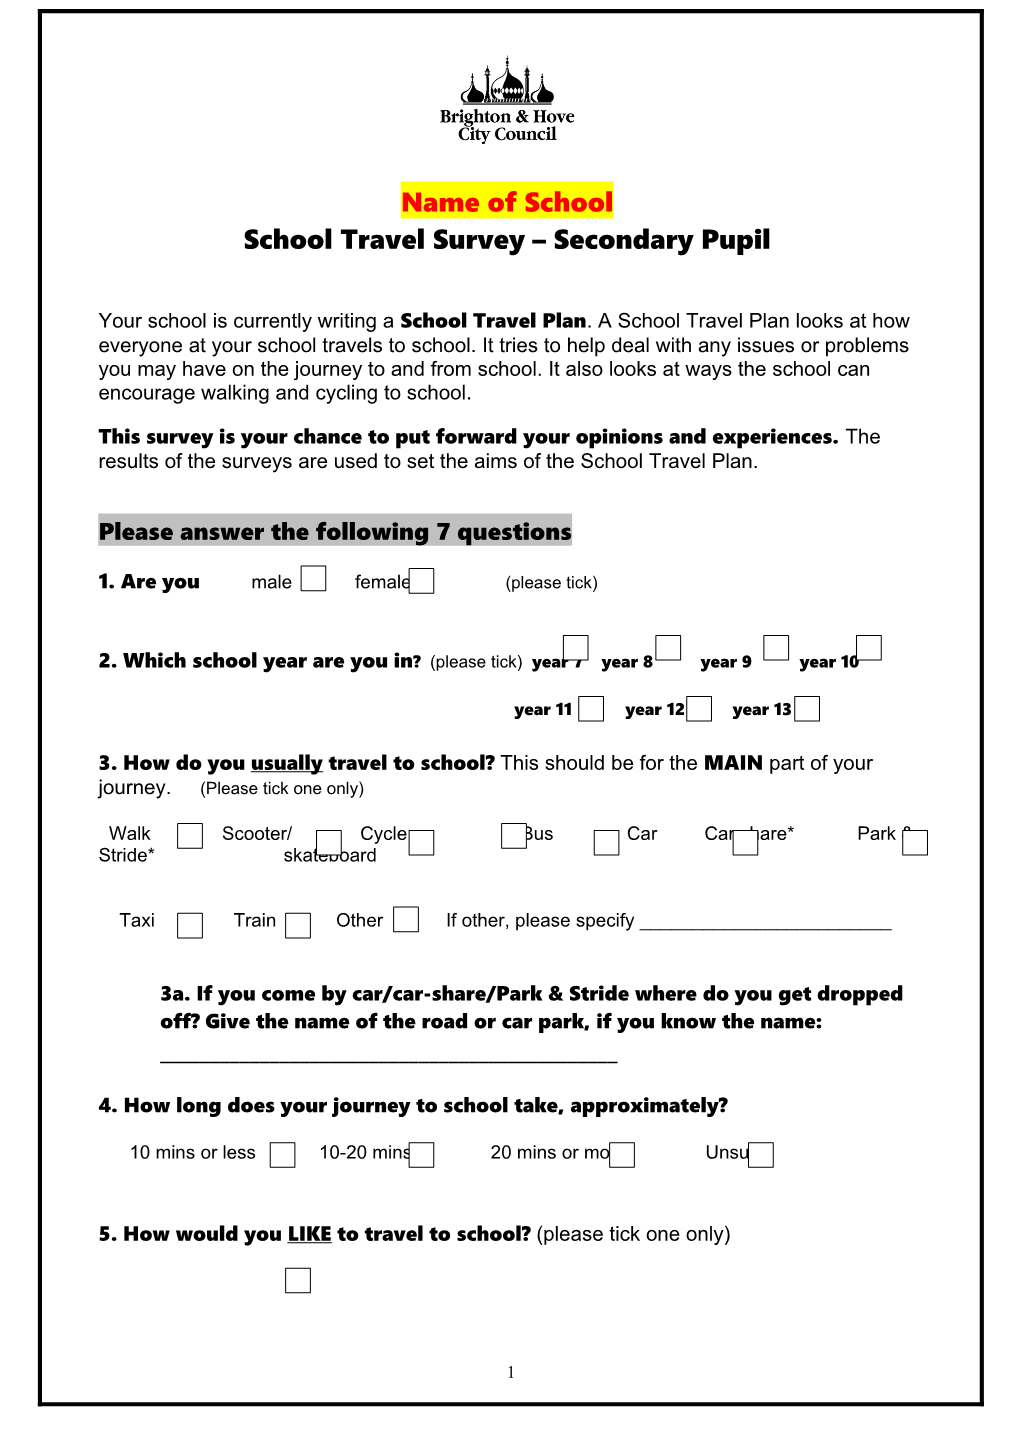 School Travel Plan Questionnaire